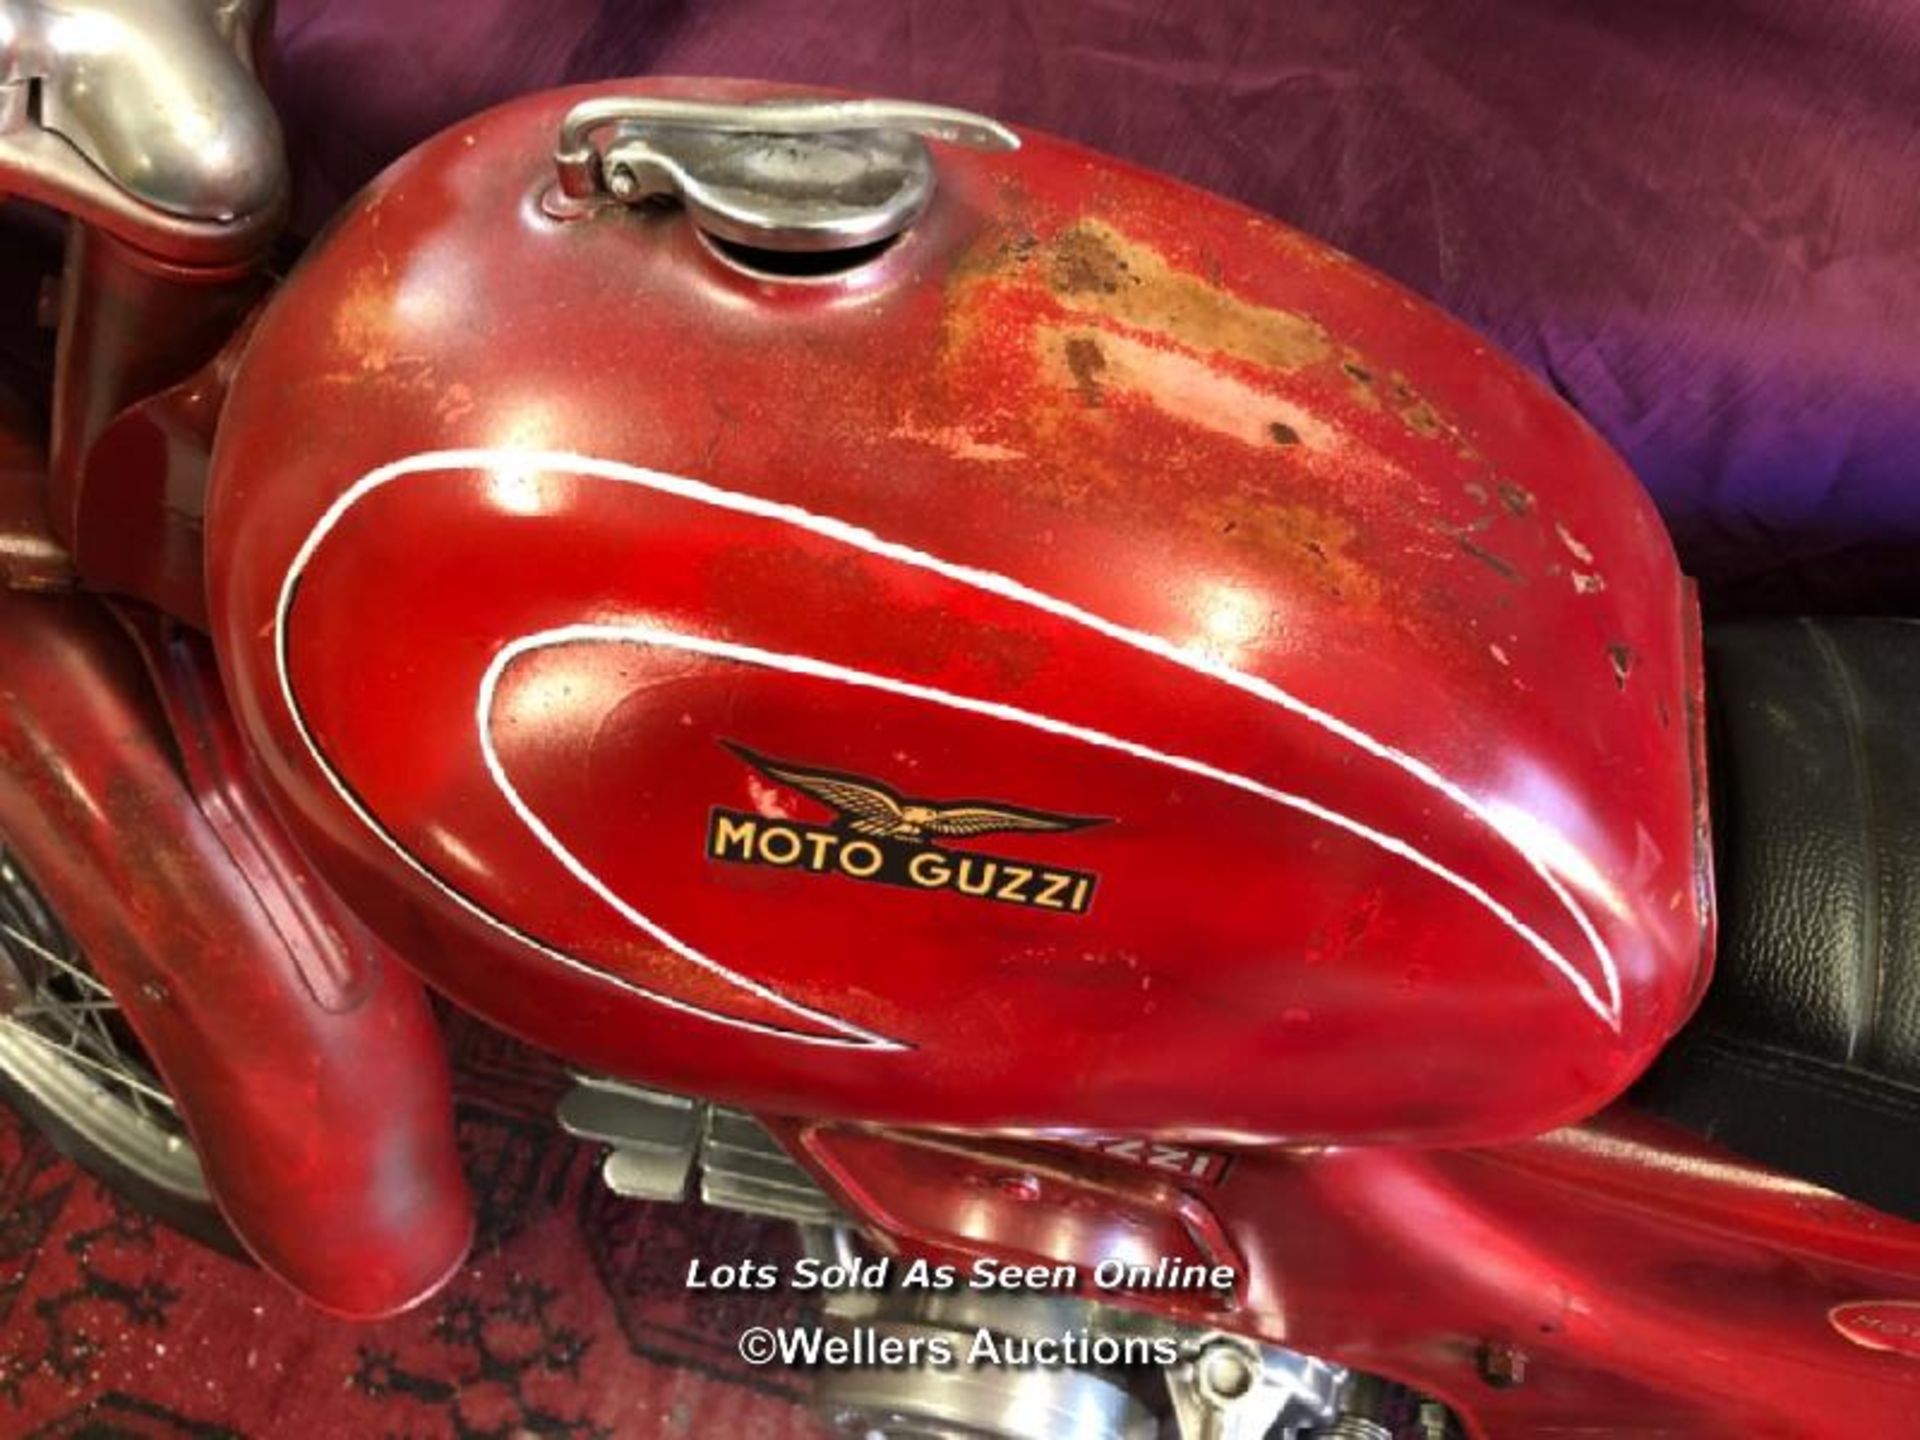 MOTO GUZZI 1954 ZIGOLA ITALIAN MOTORCYCLE, NON RUNNER DISPLAY BIKE, ORIGINAL PAINTWORK WITH LATER - Image 6 of 10